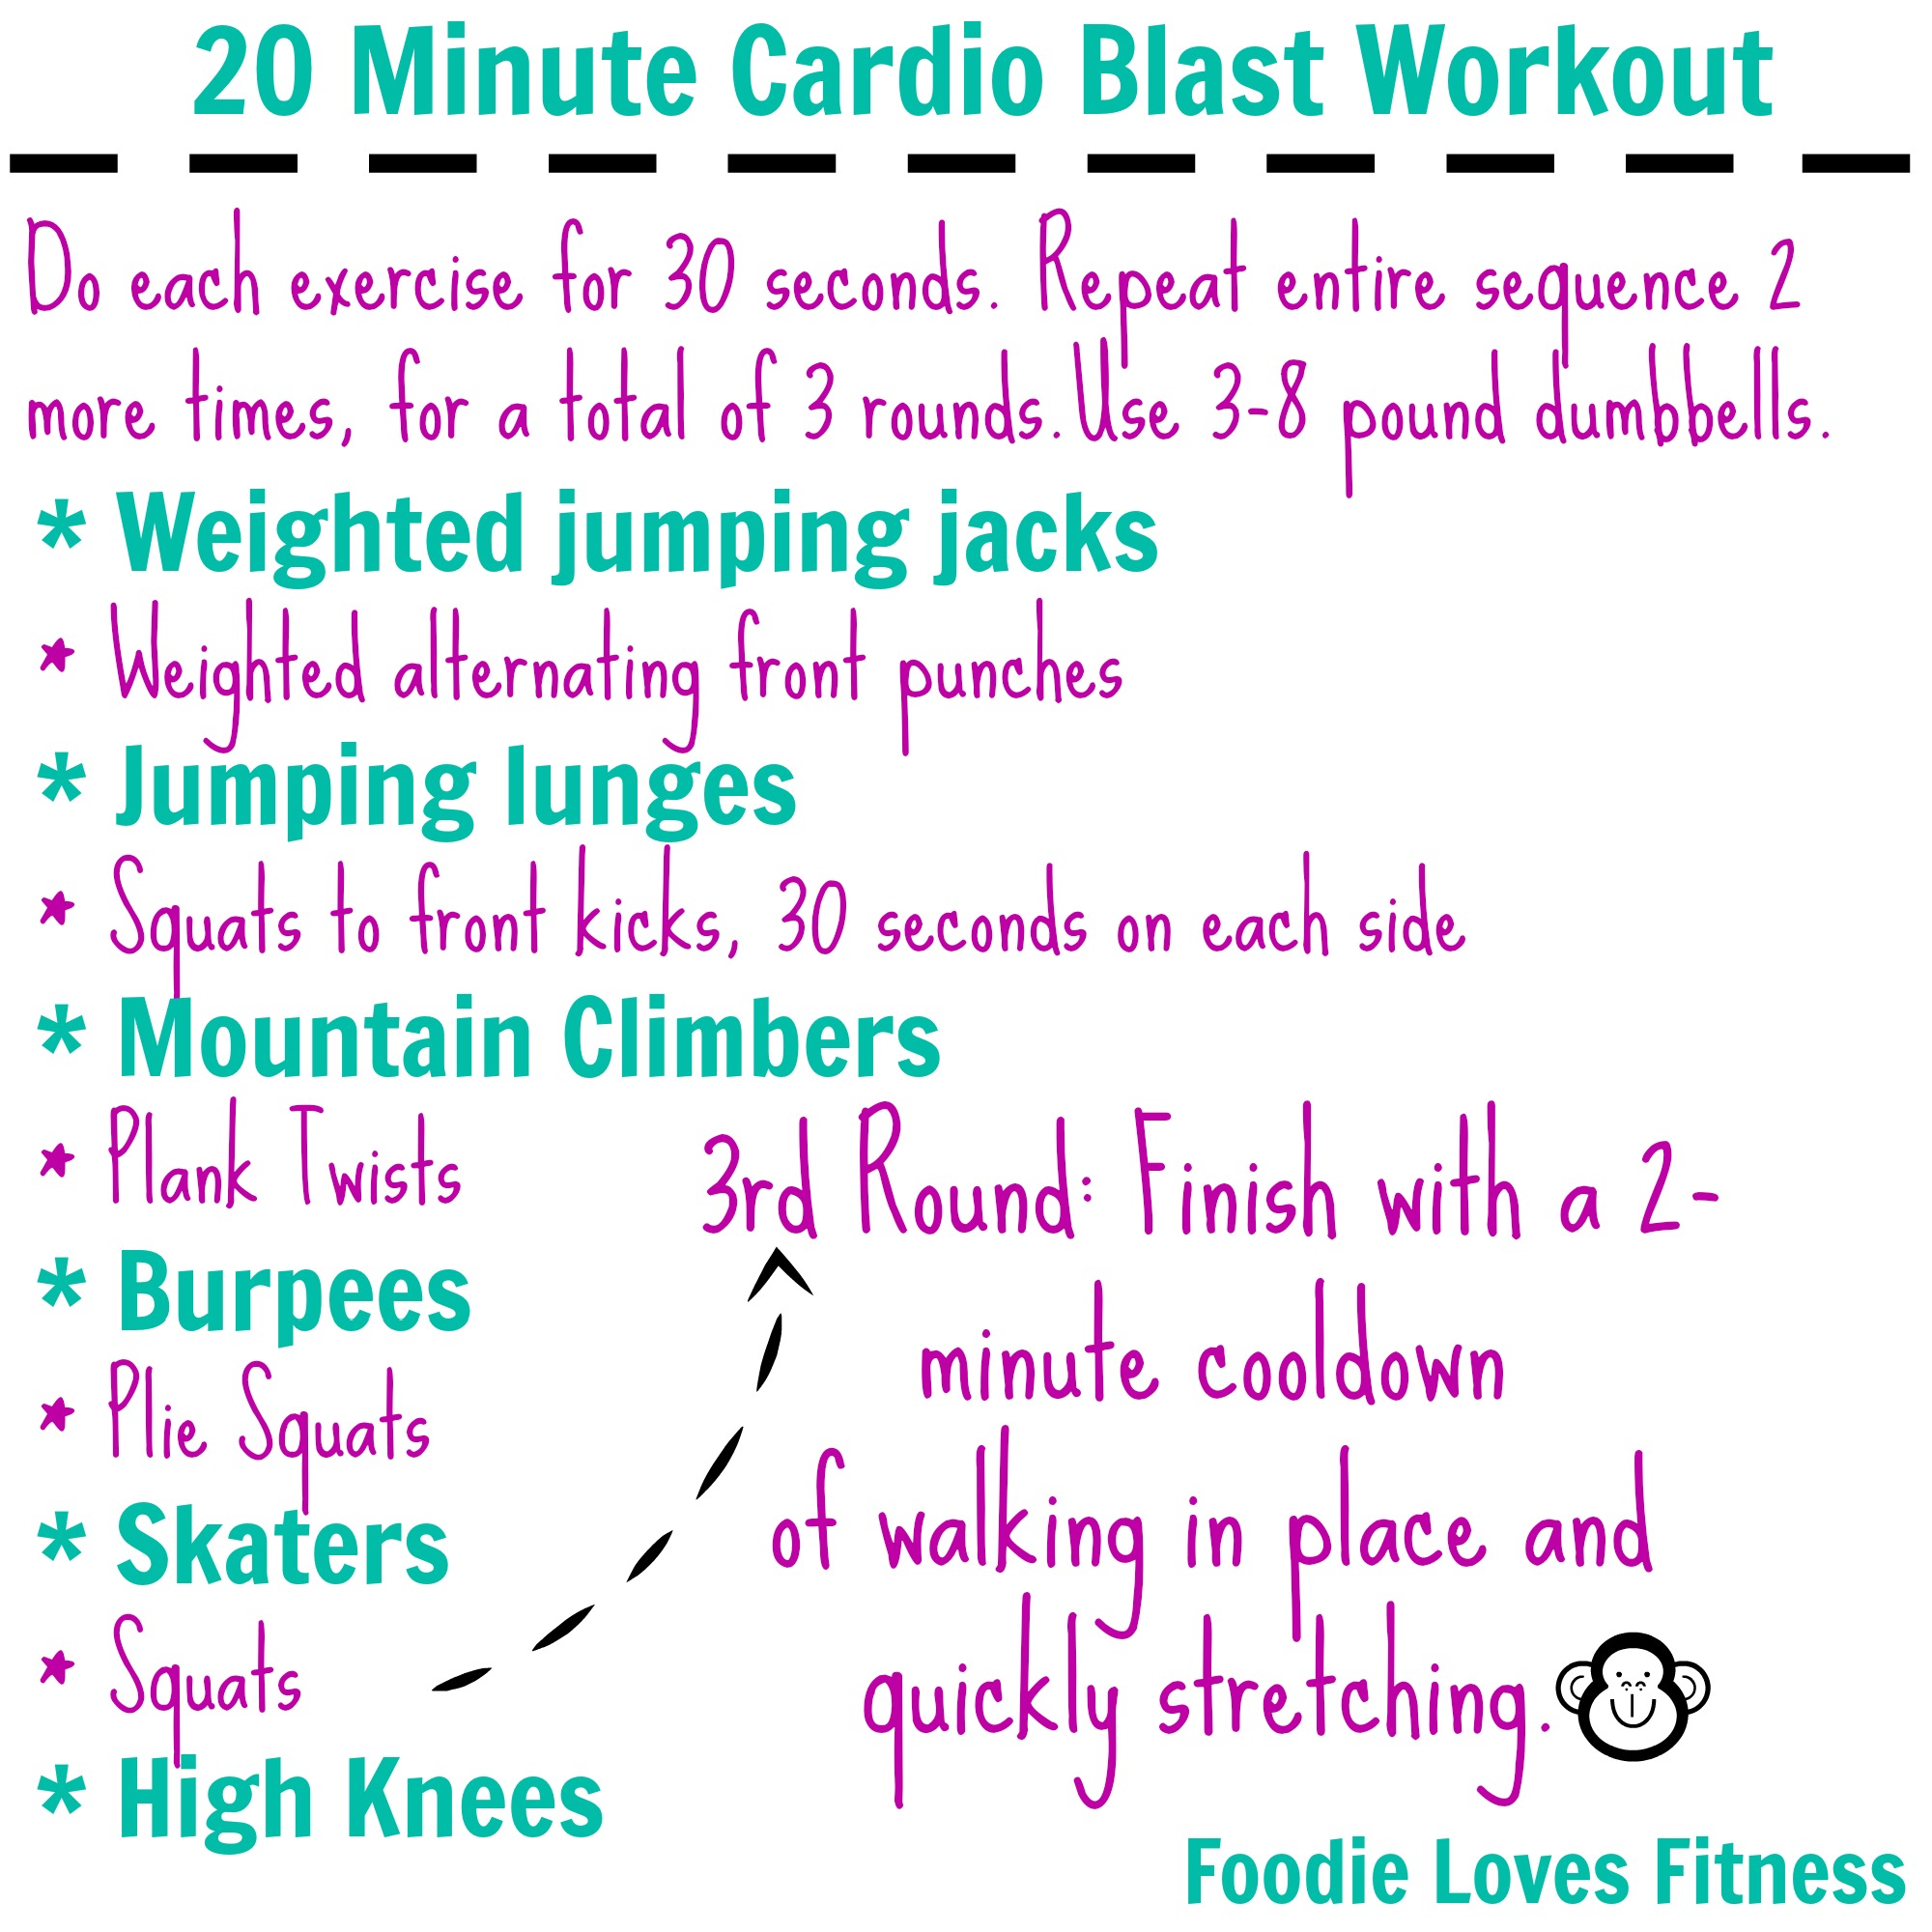 20 Minute Cardio Blast Workout